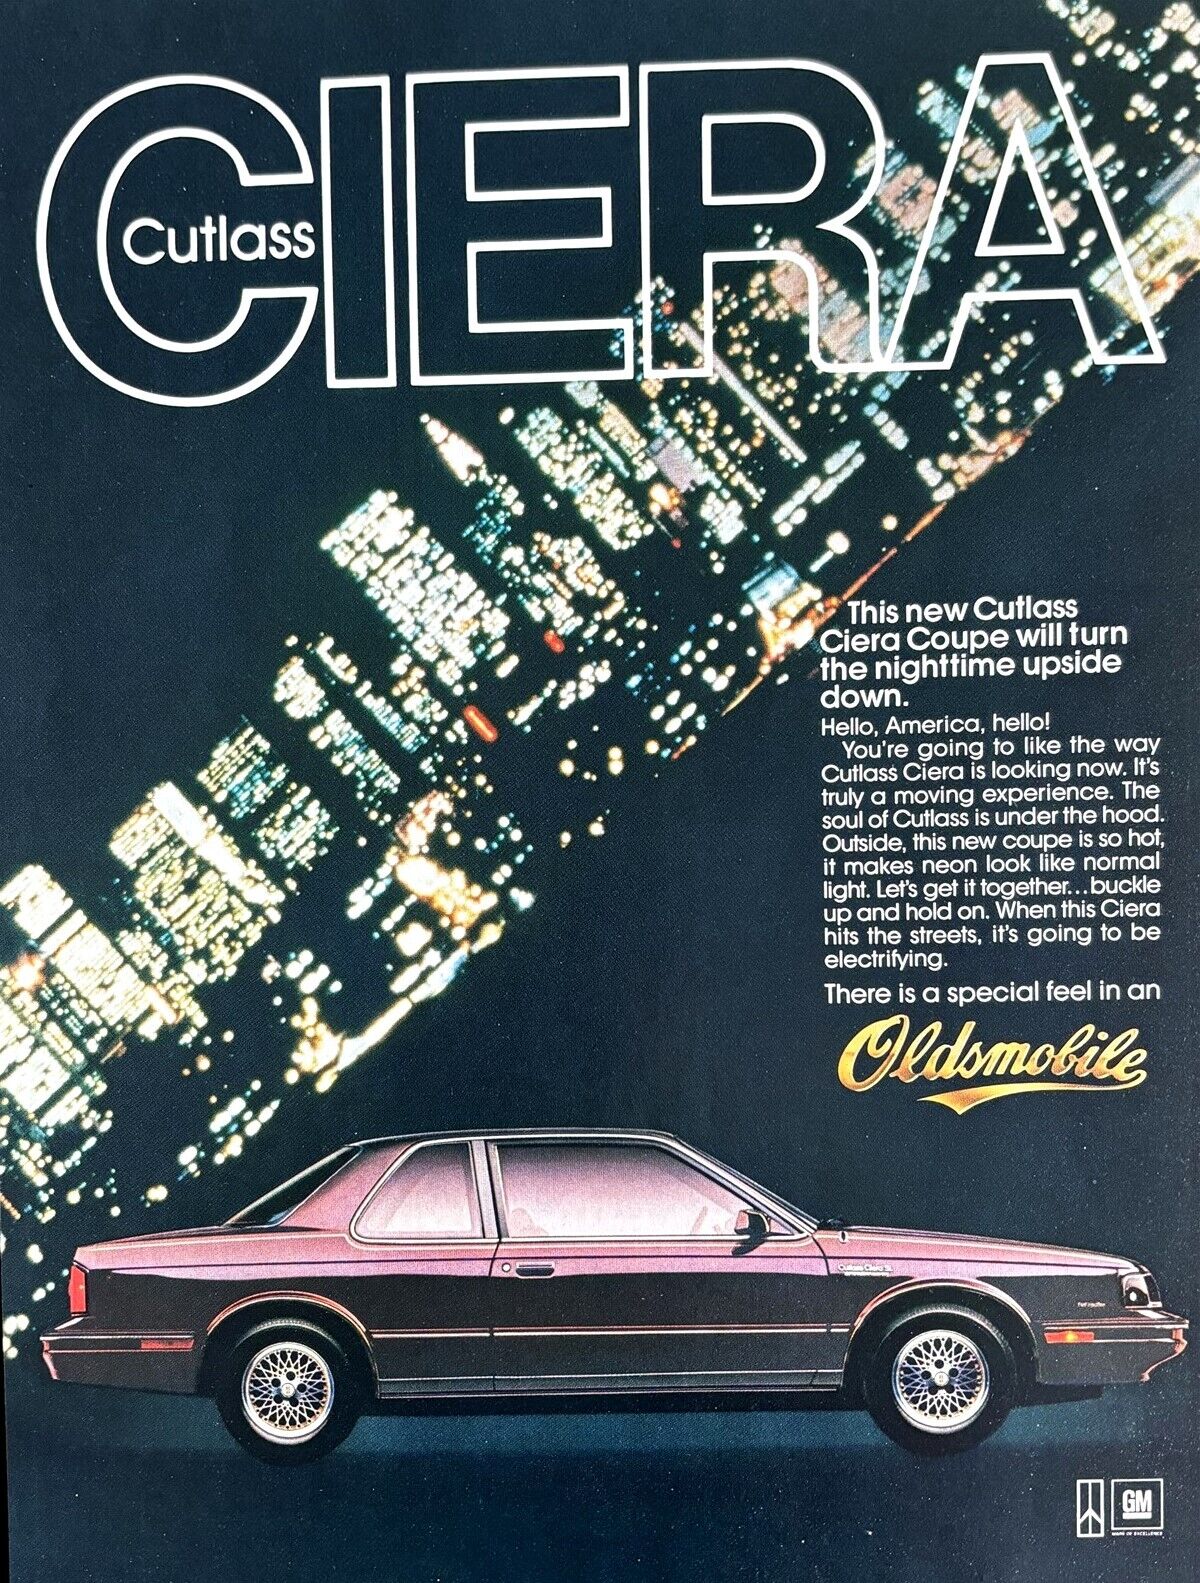 1986 OLDSMOBILE Cutlass Ciera Coupe New York At Night Photo Vintage PRINT AD